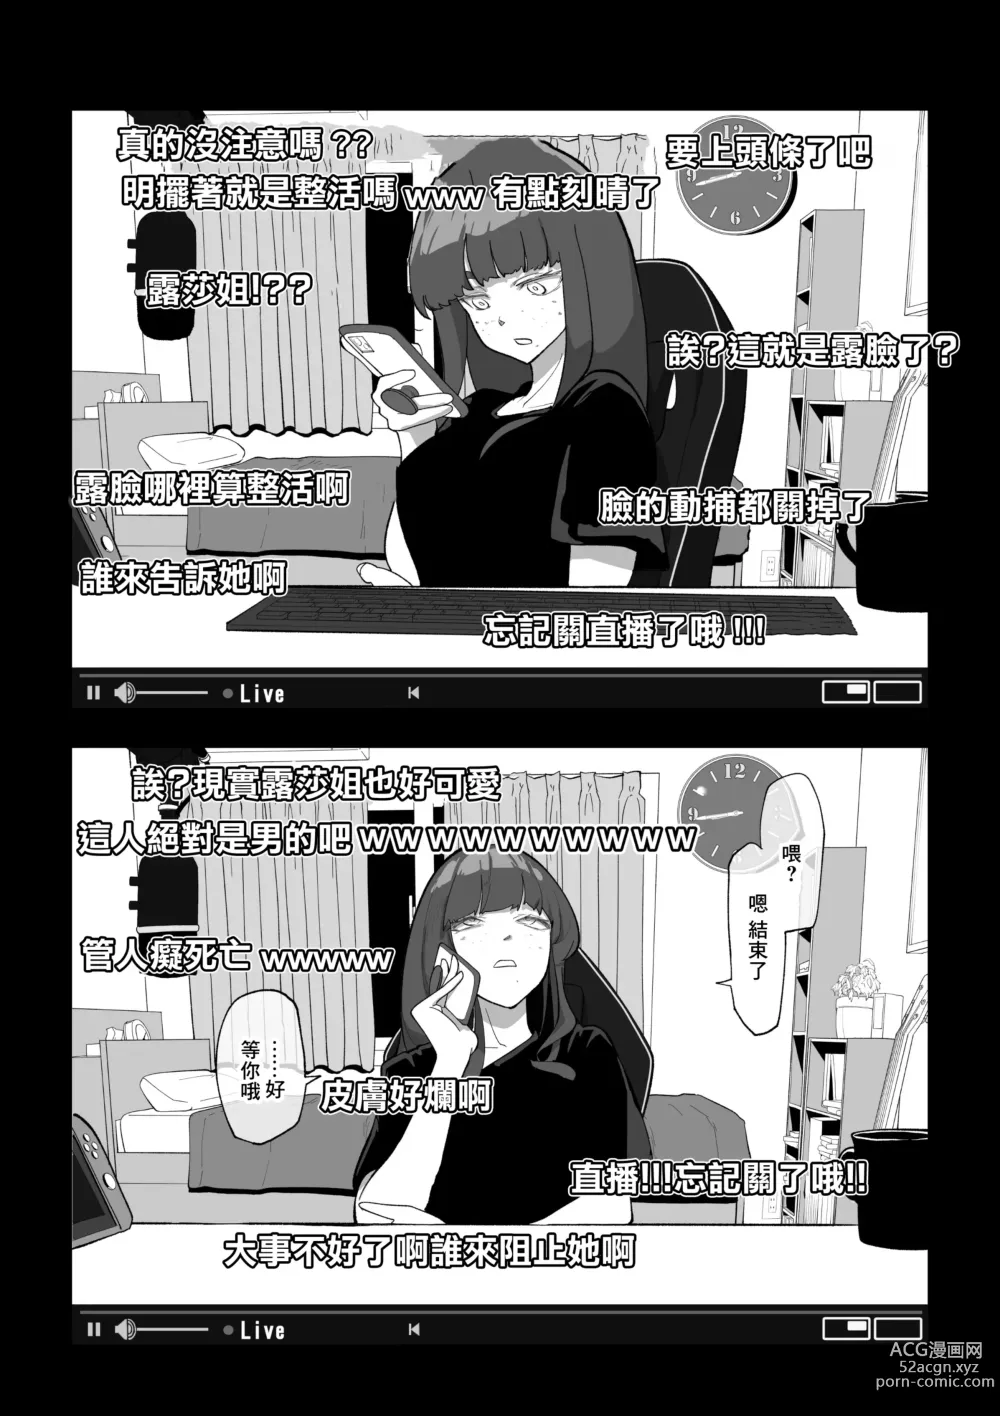 Page 6 of doujinshi 忘關攝像頭後SEX直播少女